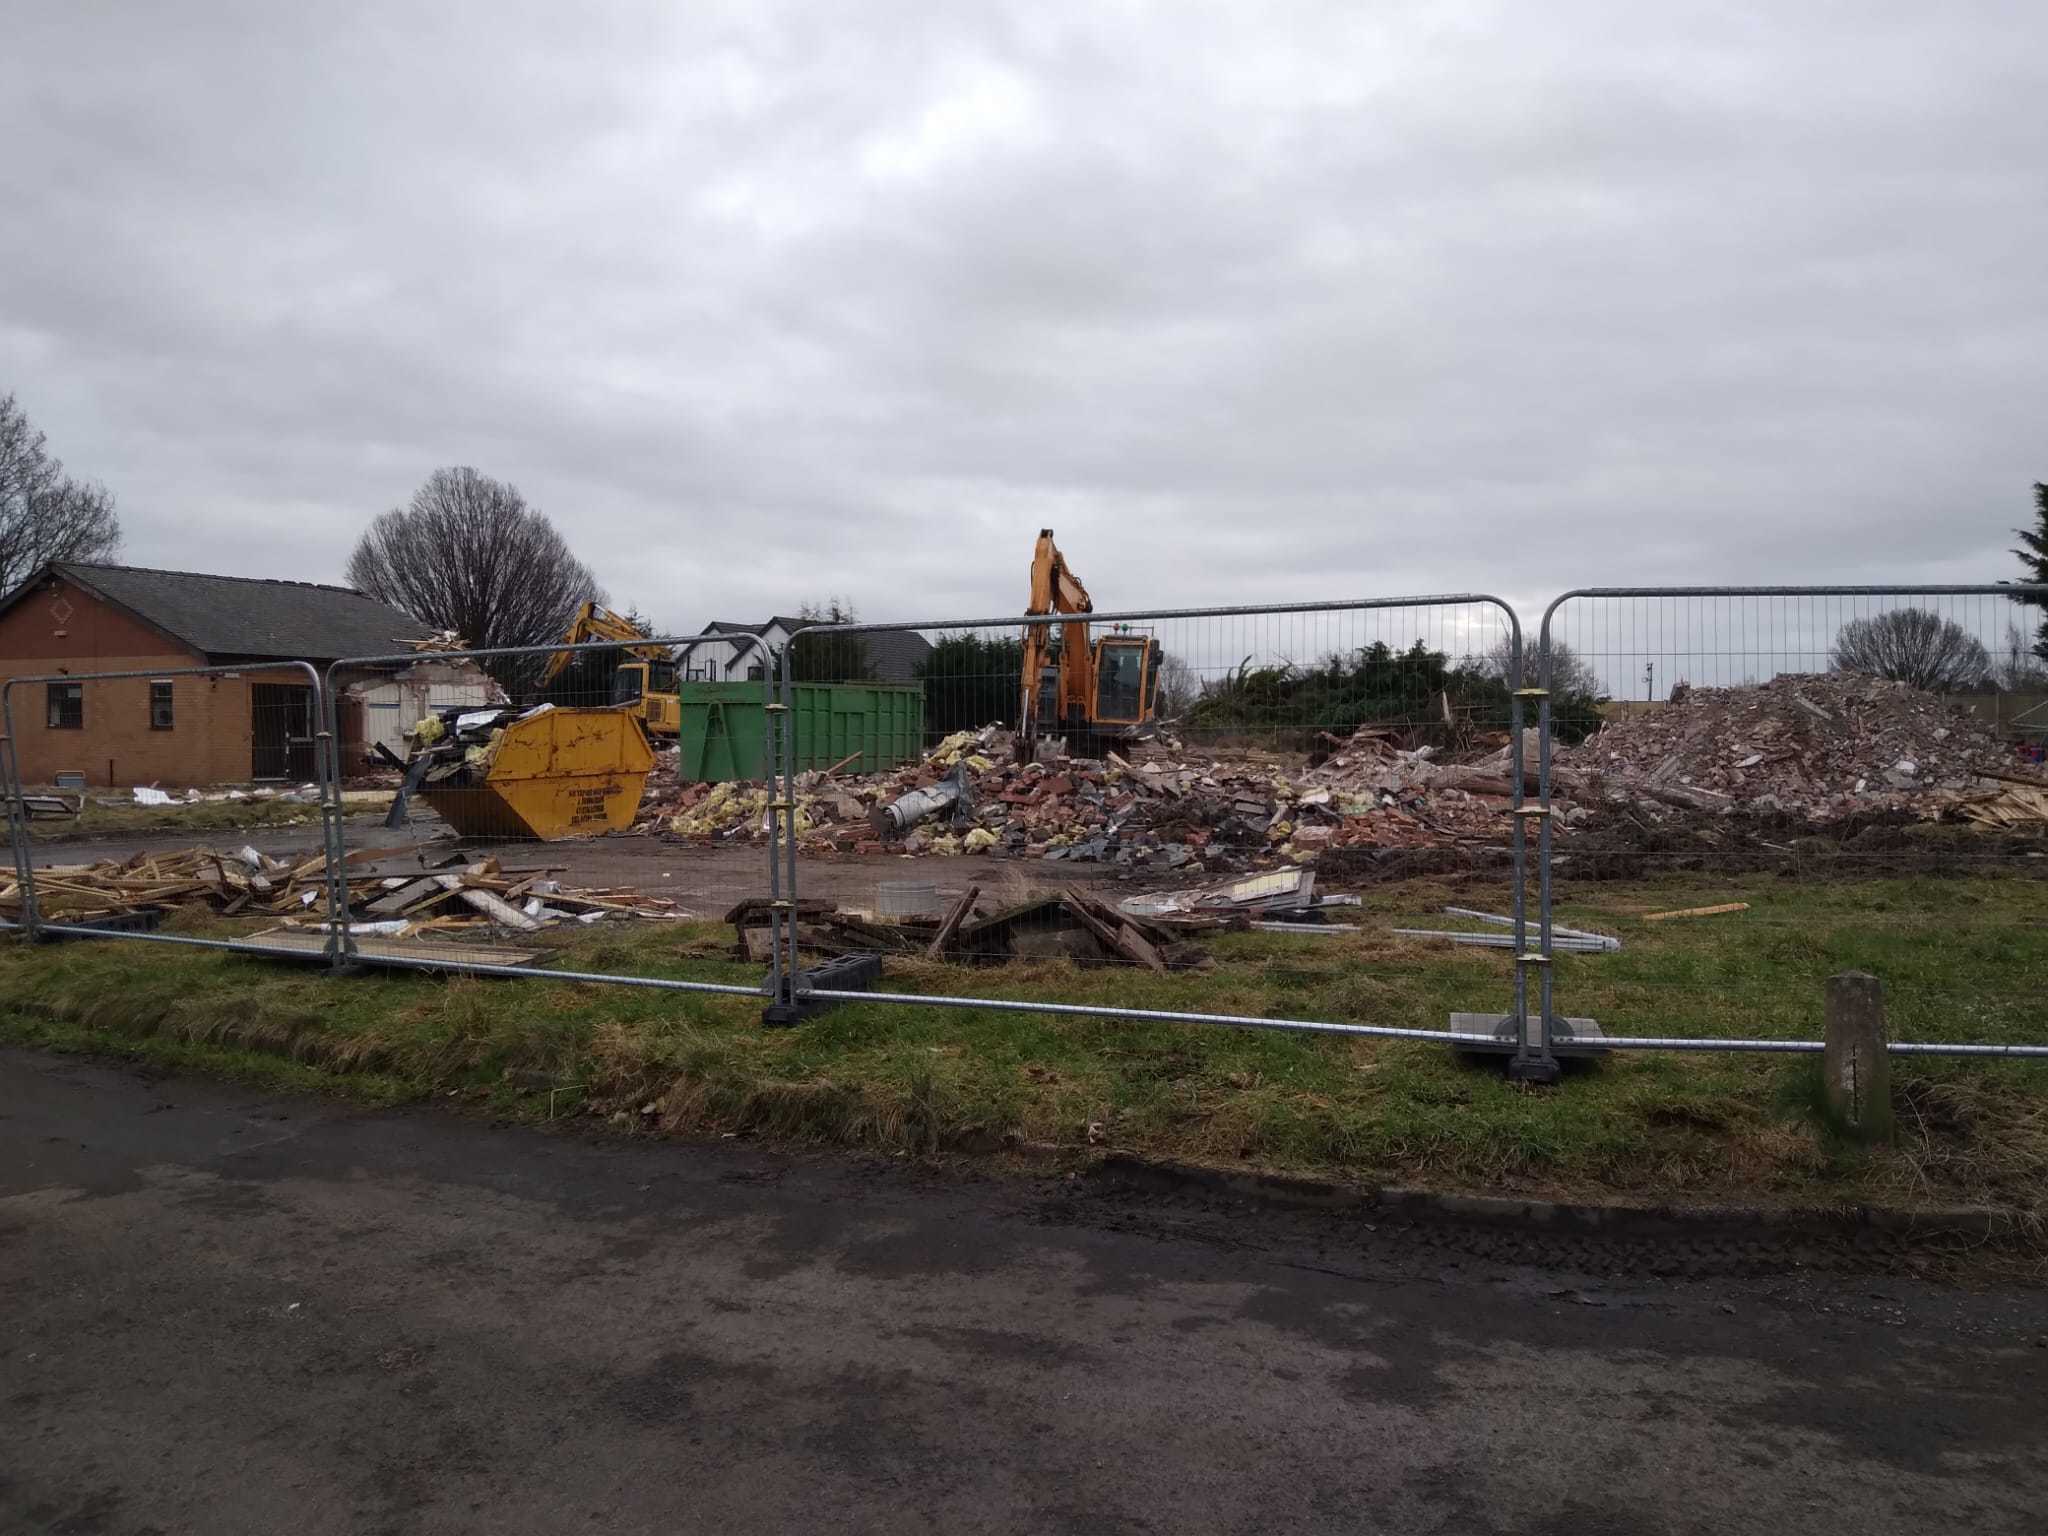 Radcliffe Meadows Nursing Home in Culcheth has been demolished